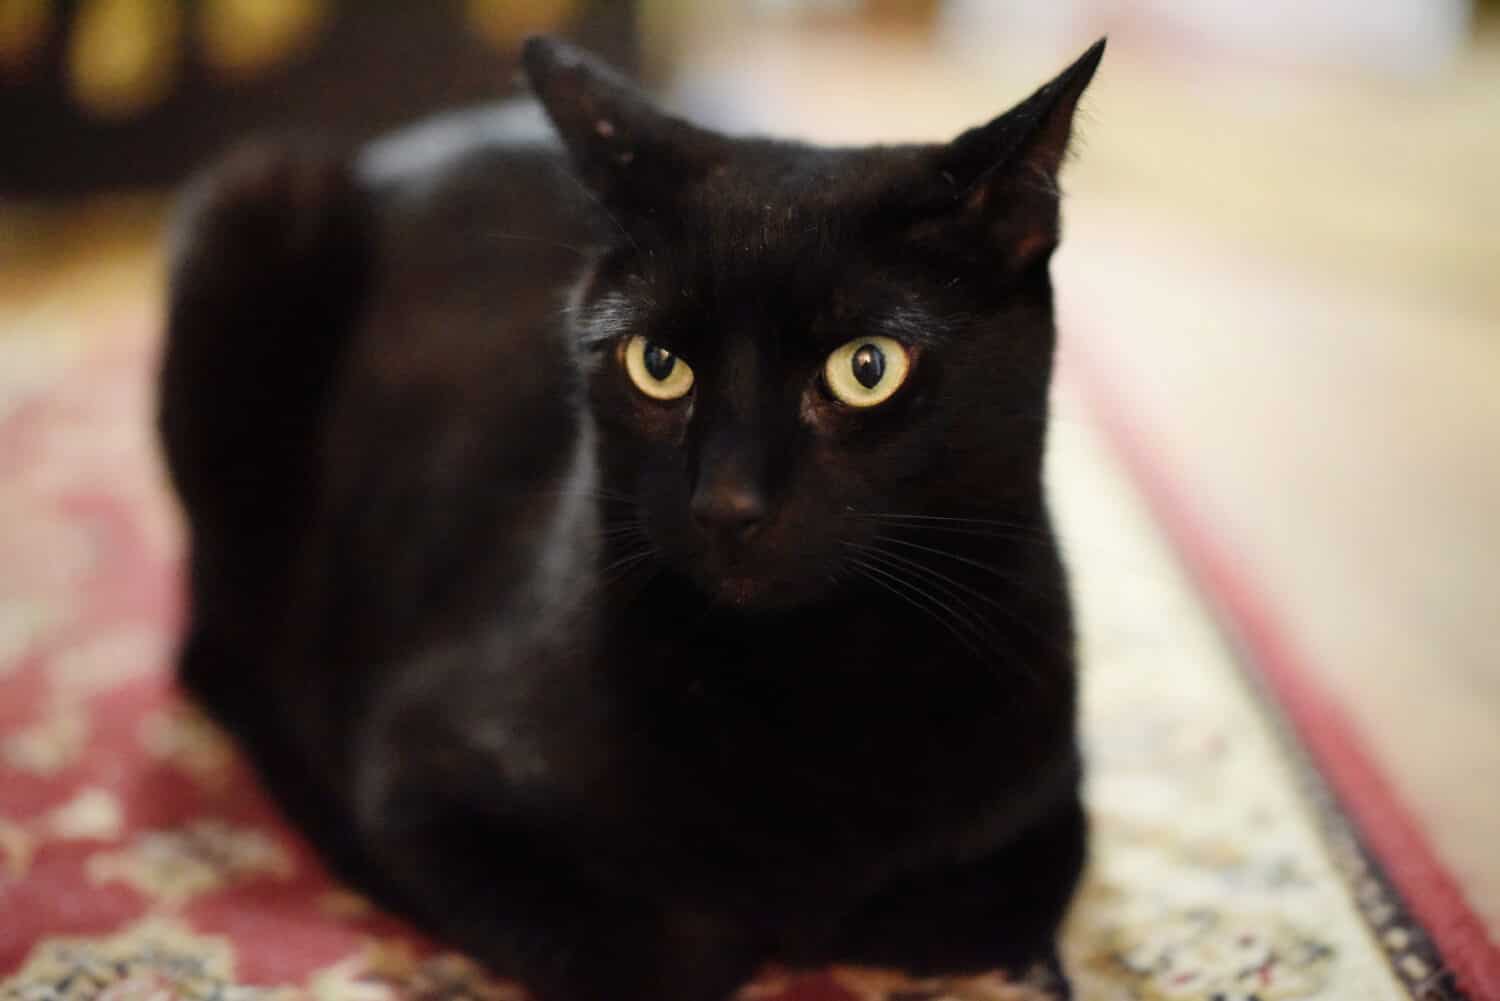 Black cat alert but relaxed.